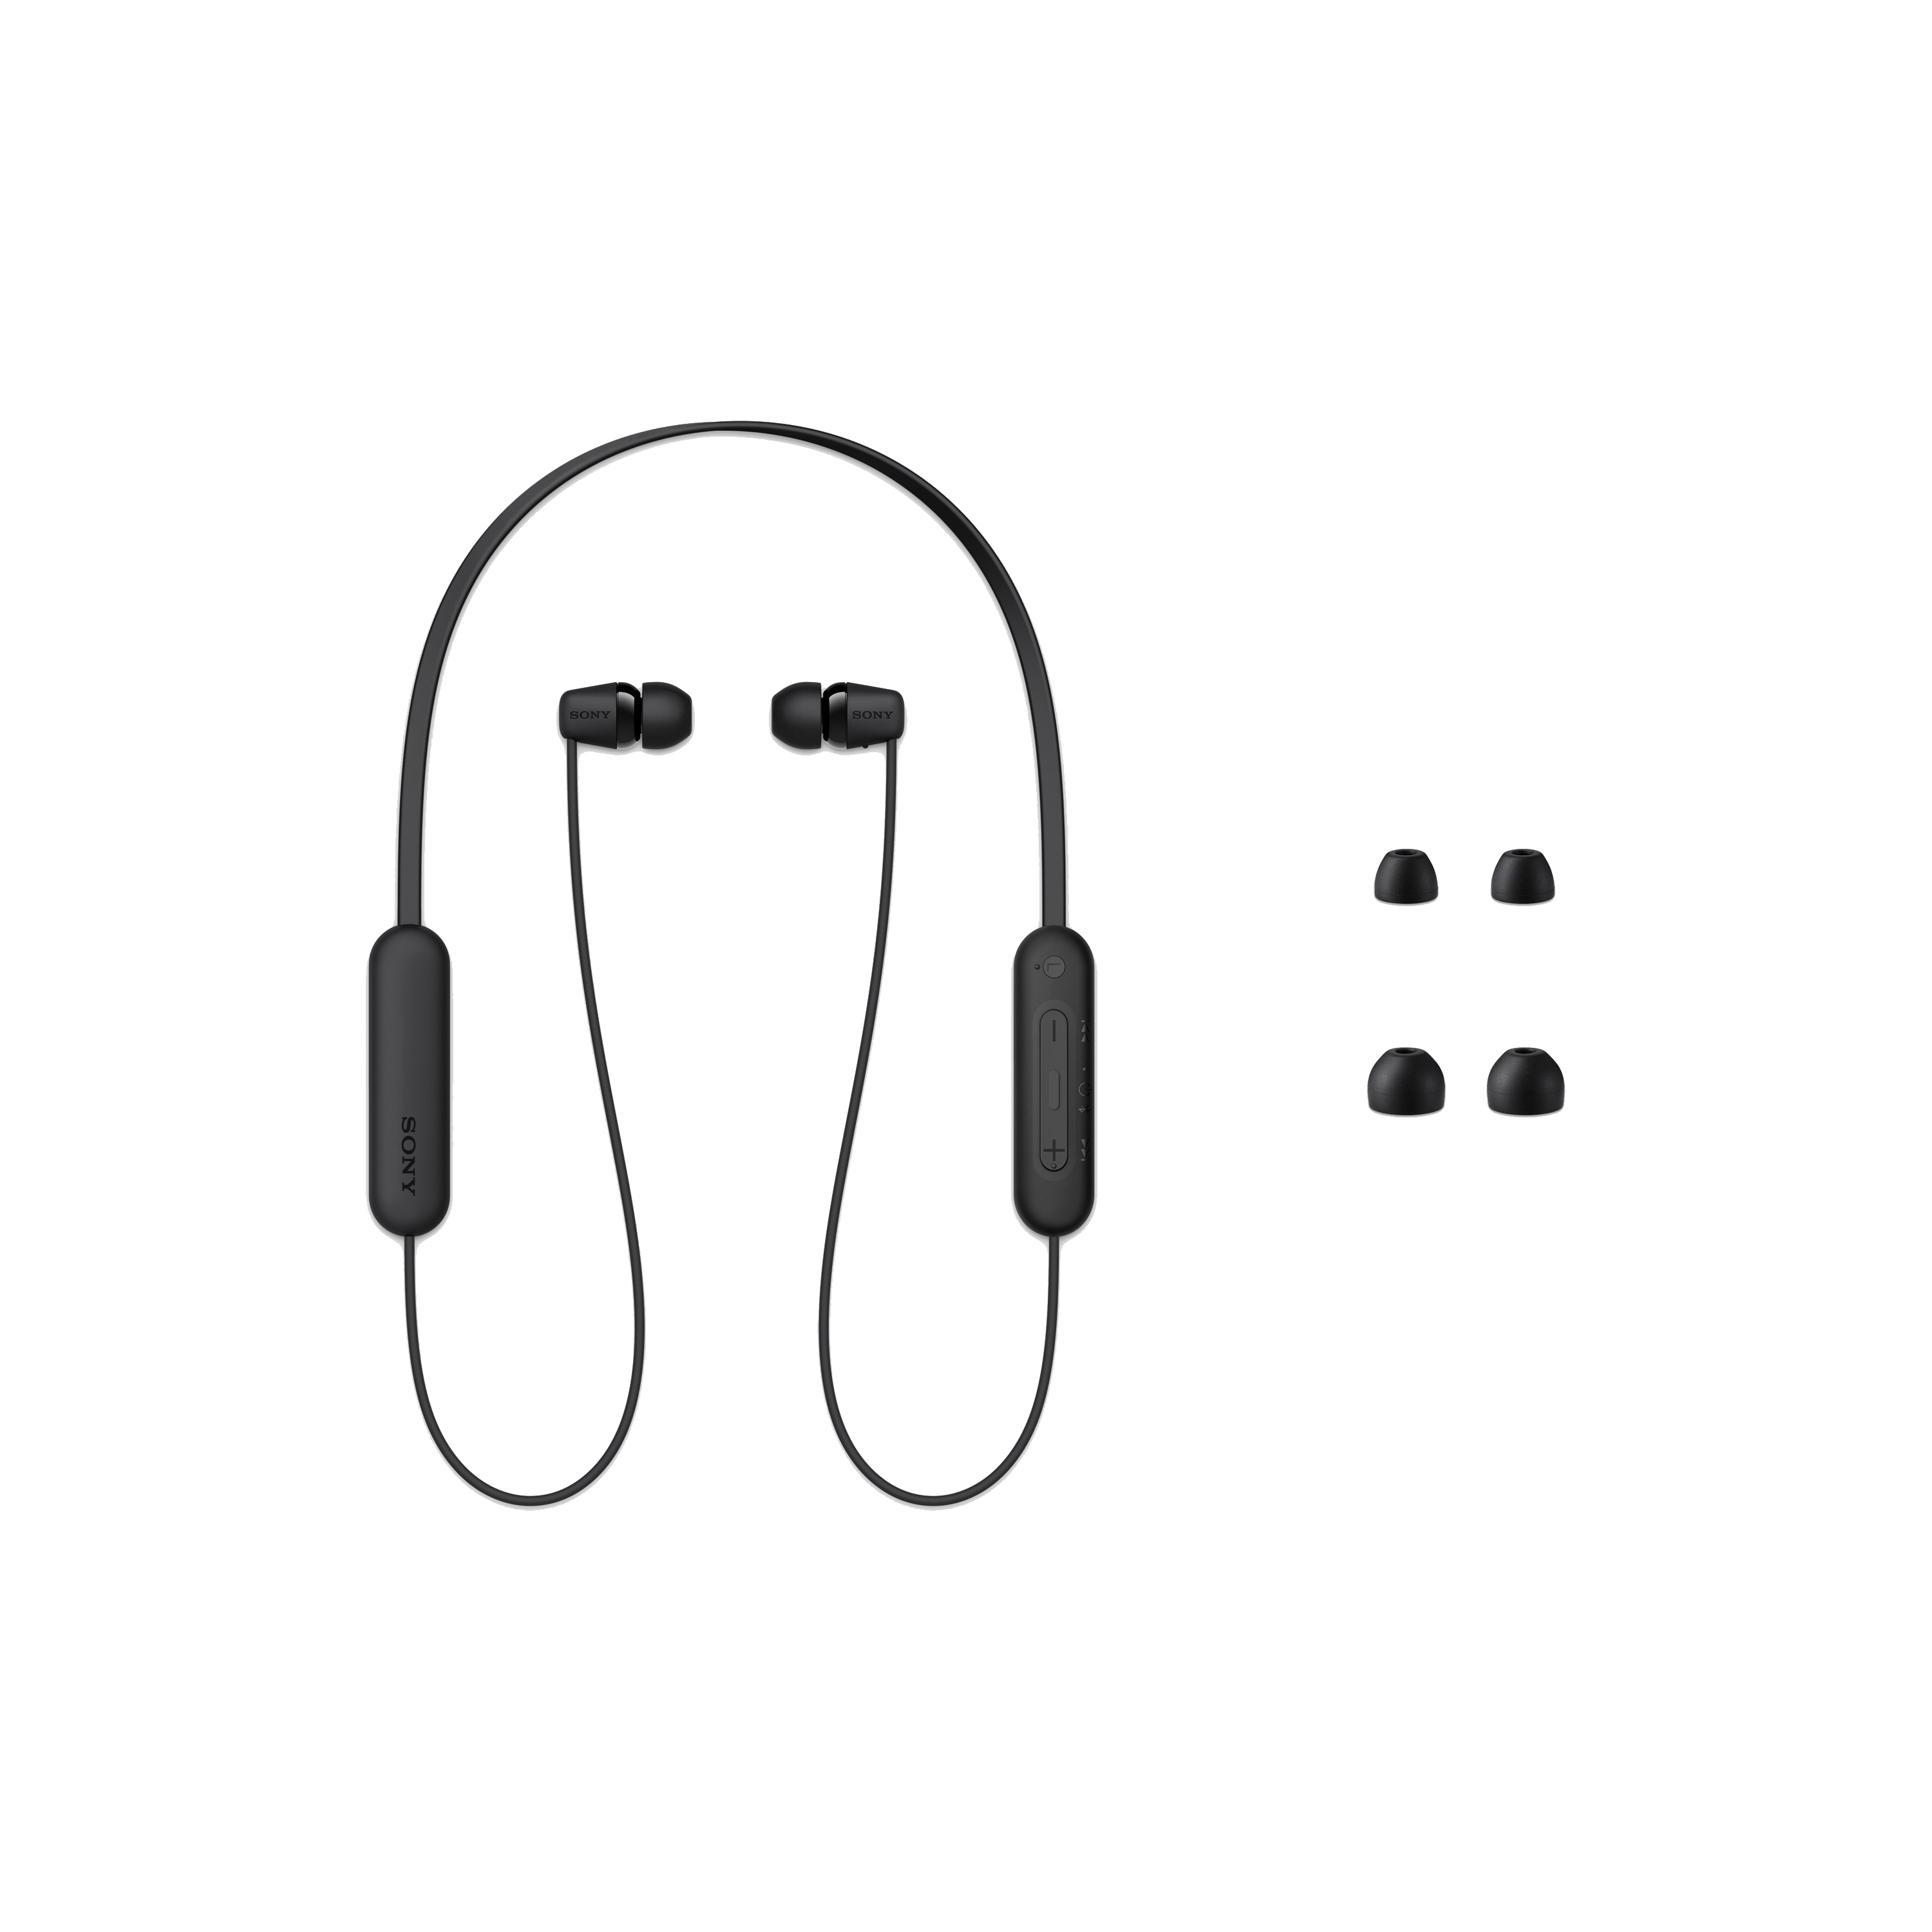 WI-C100 黑色耳機和隨副耳塞圖